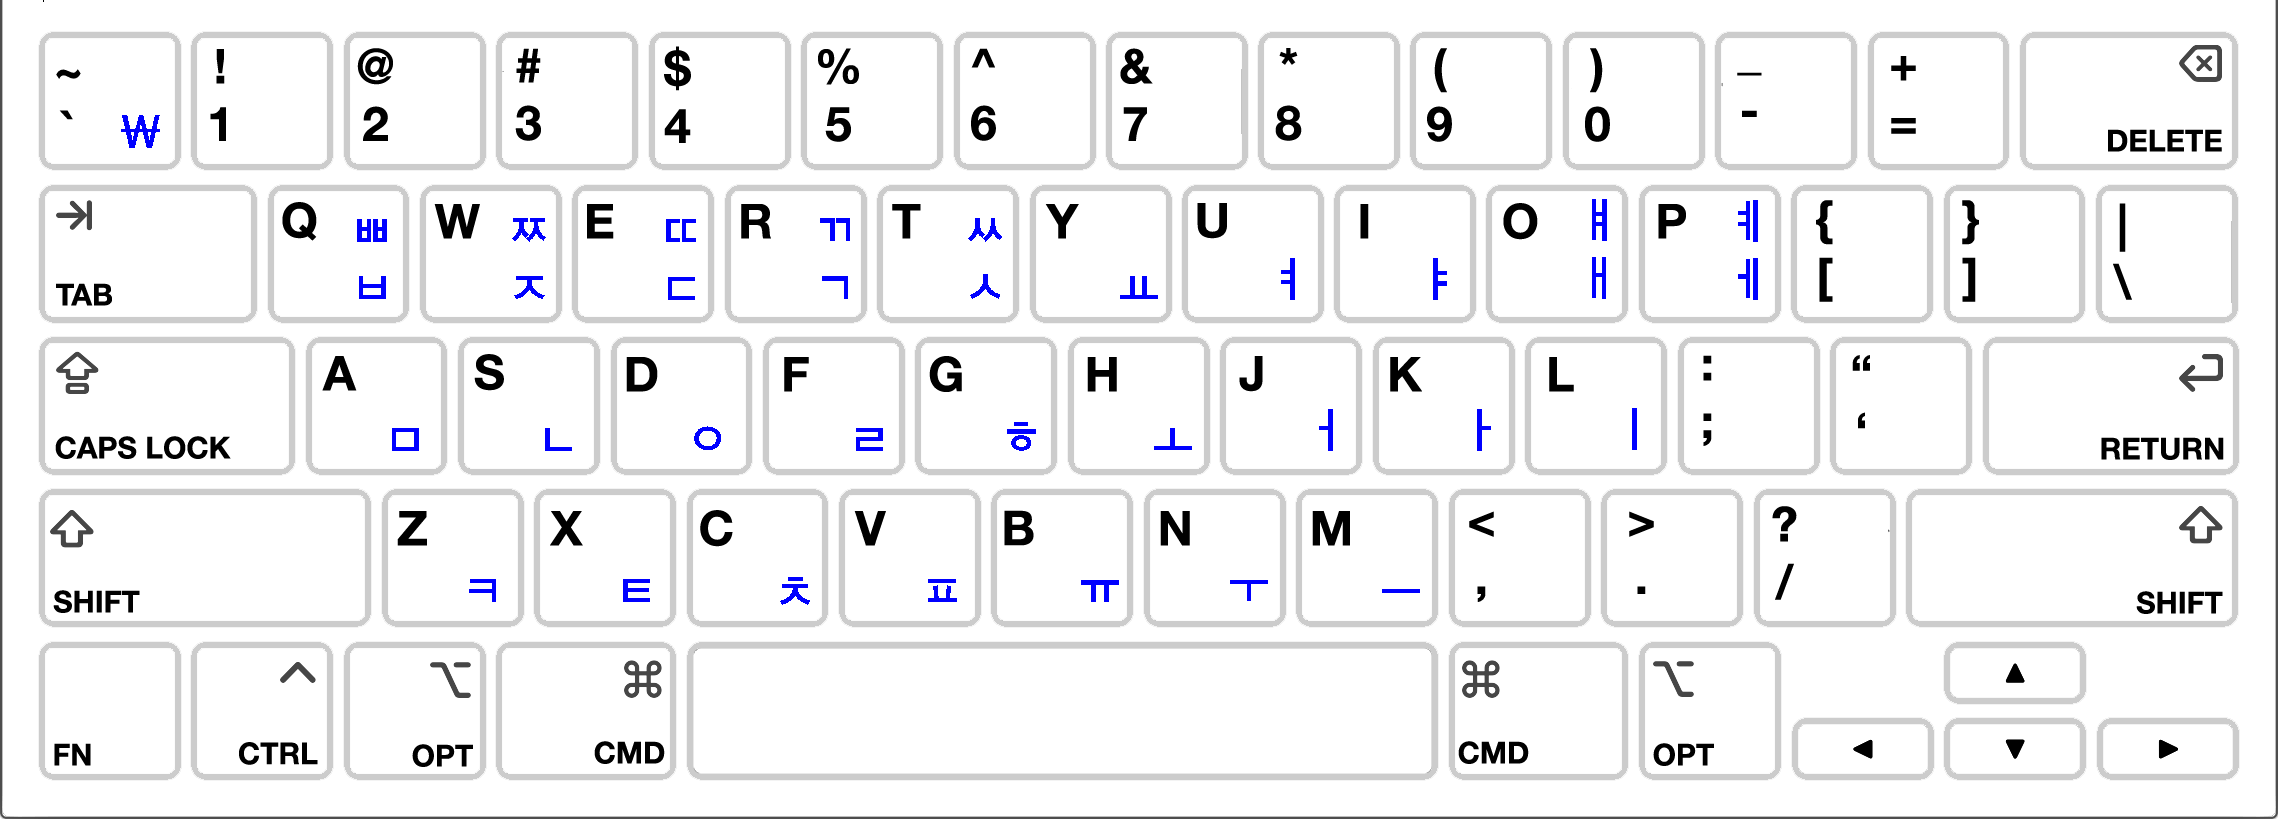 Steam keyboard language фото 87